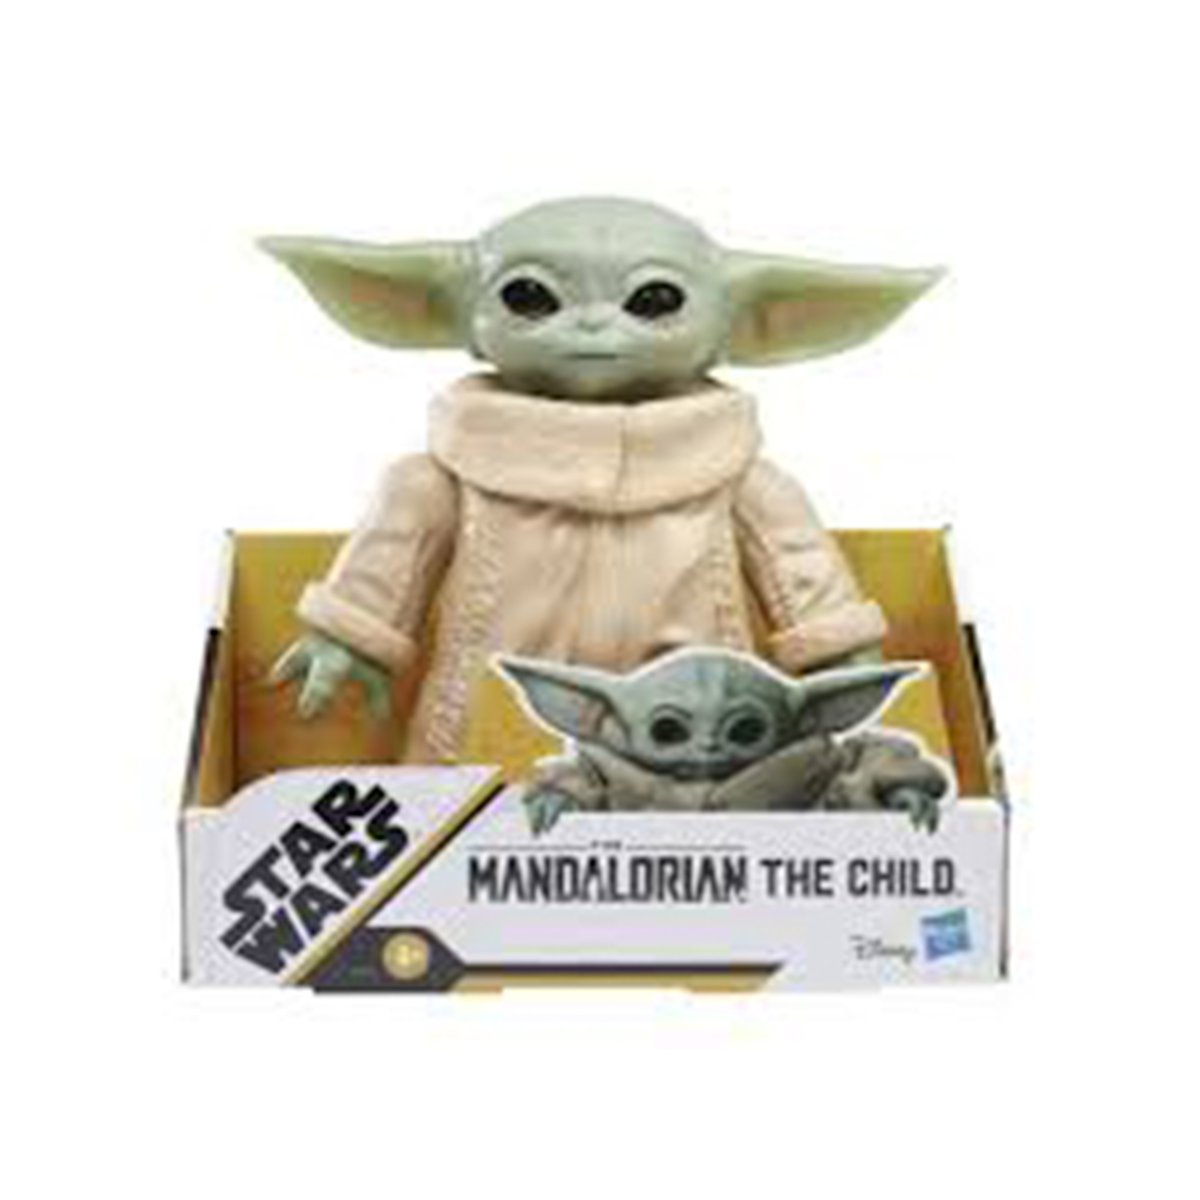 Star Wars Mandalorian The Child F1116